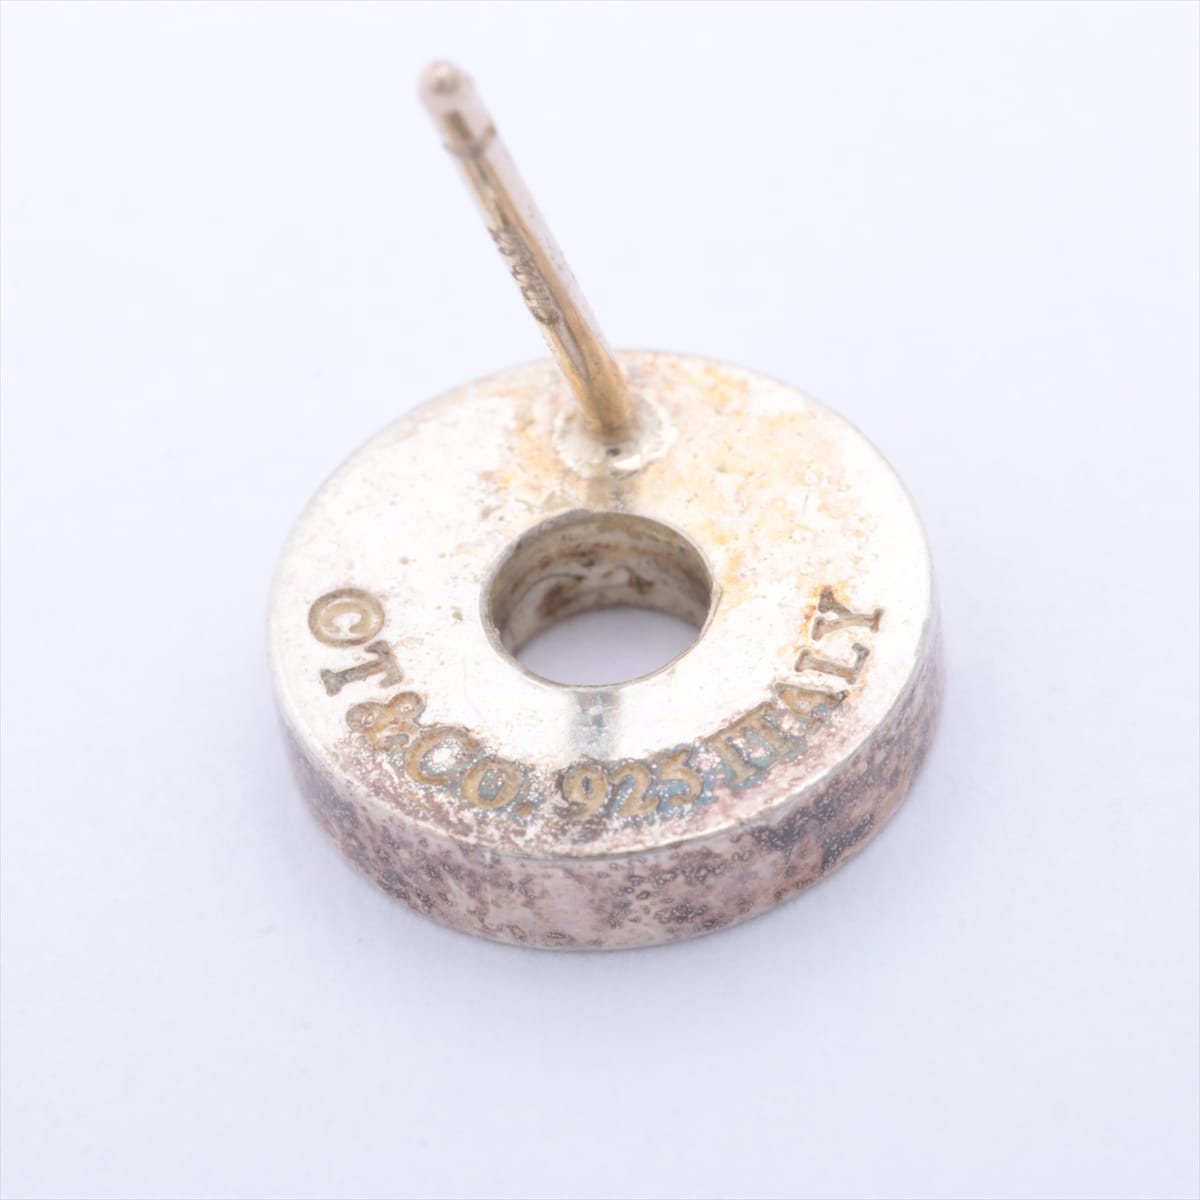 Tiffany 1837 Circle Piercing jewelry 925 2.7g Silver